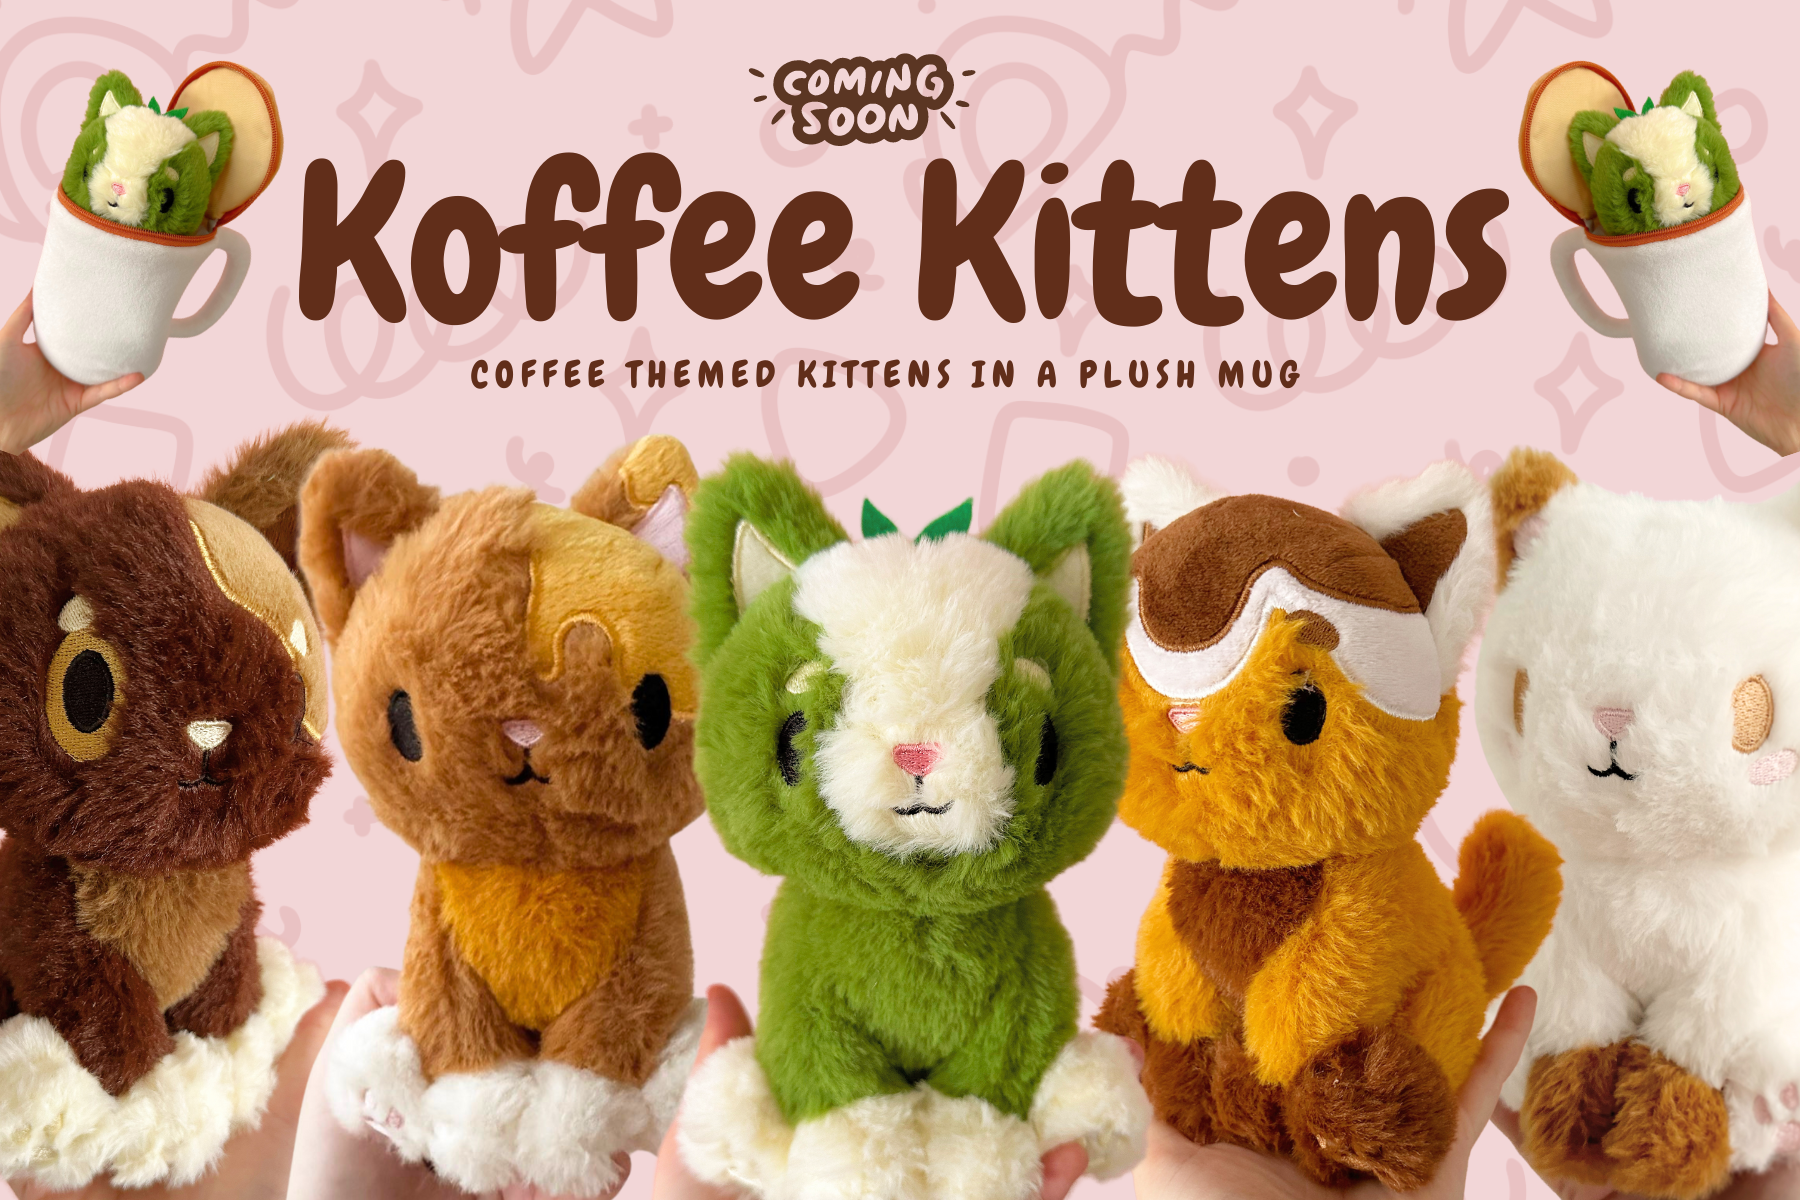 Koffee Kittens